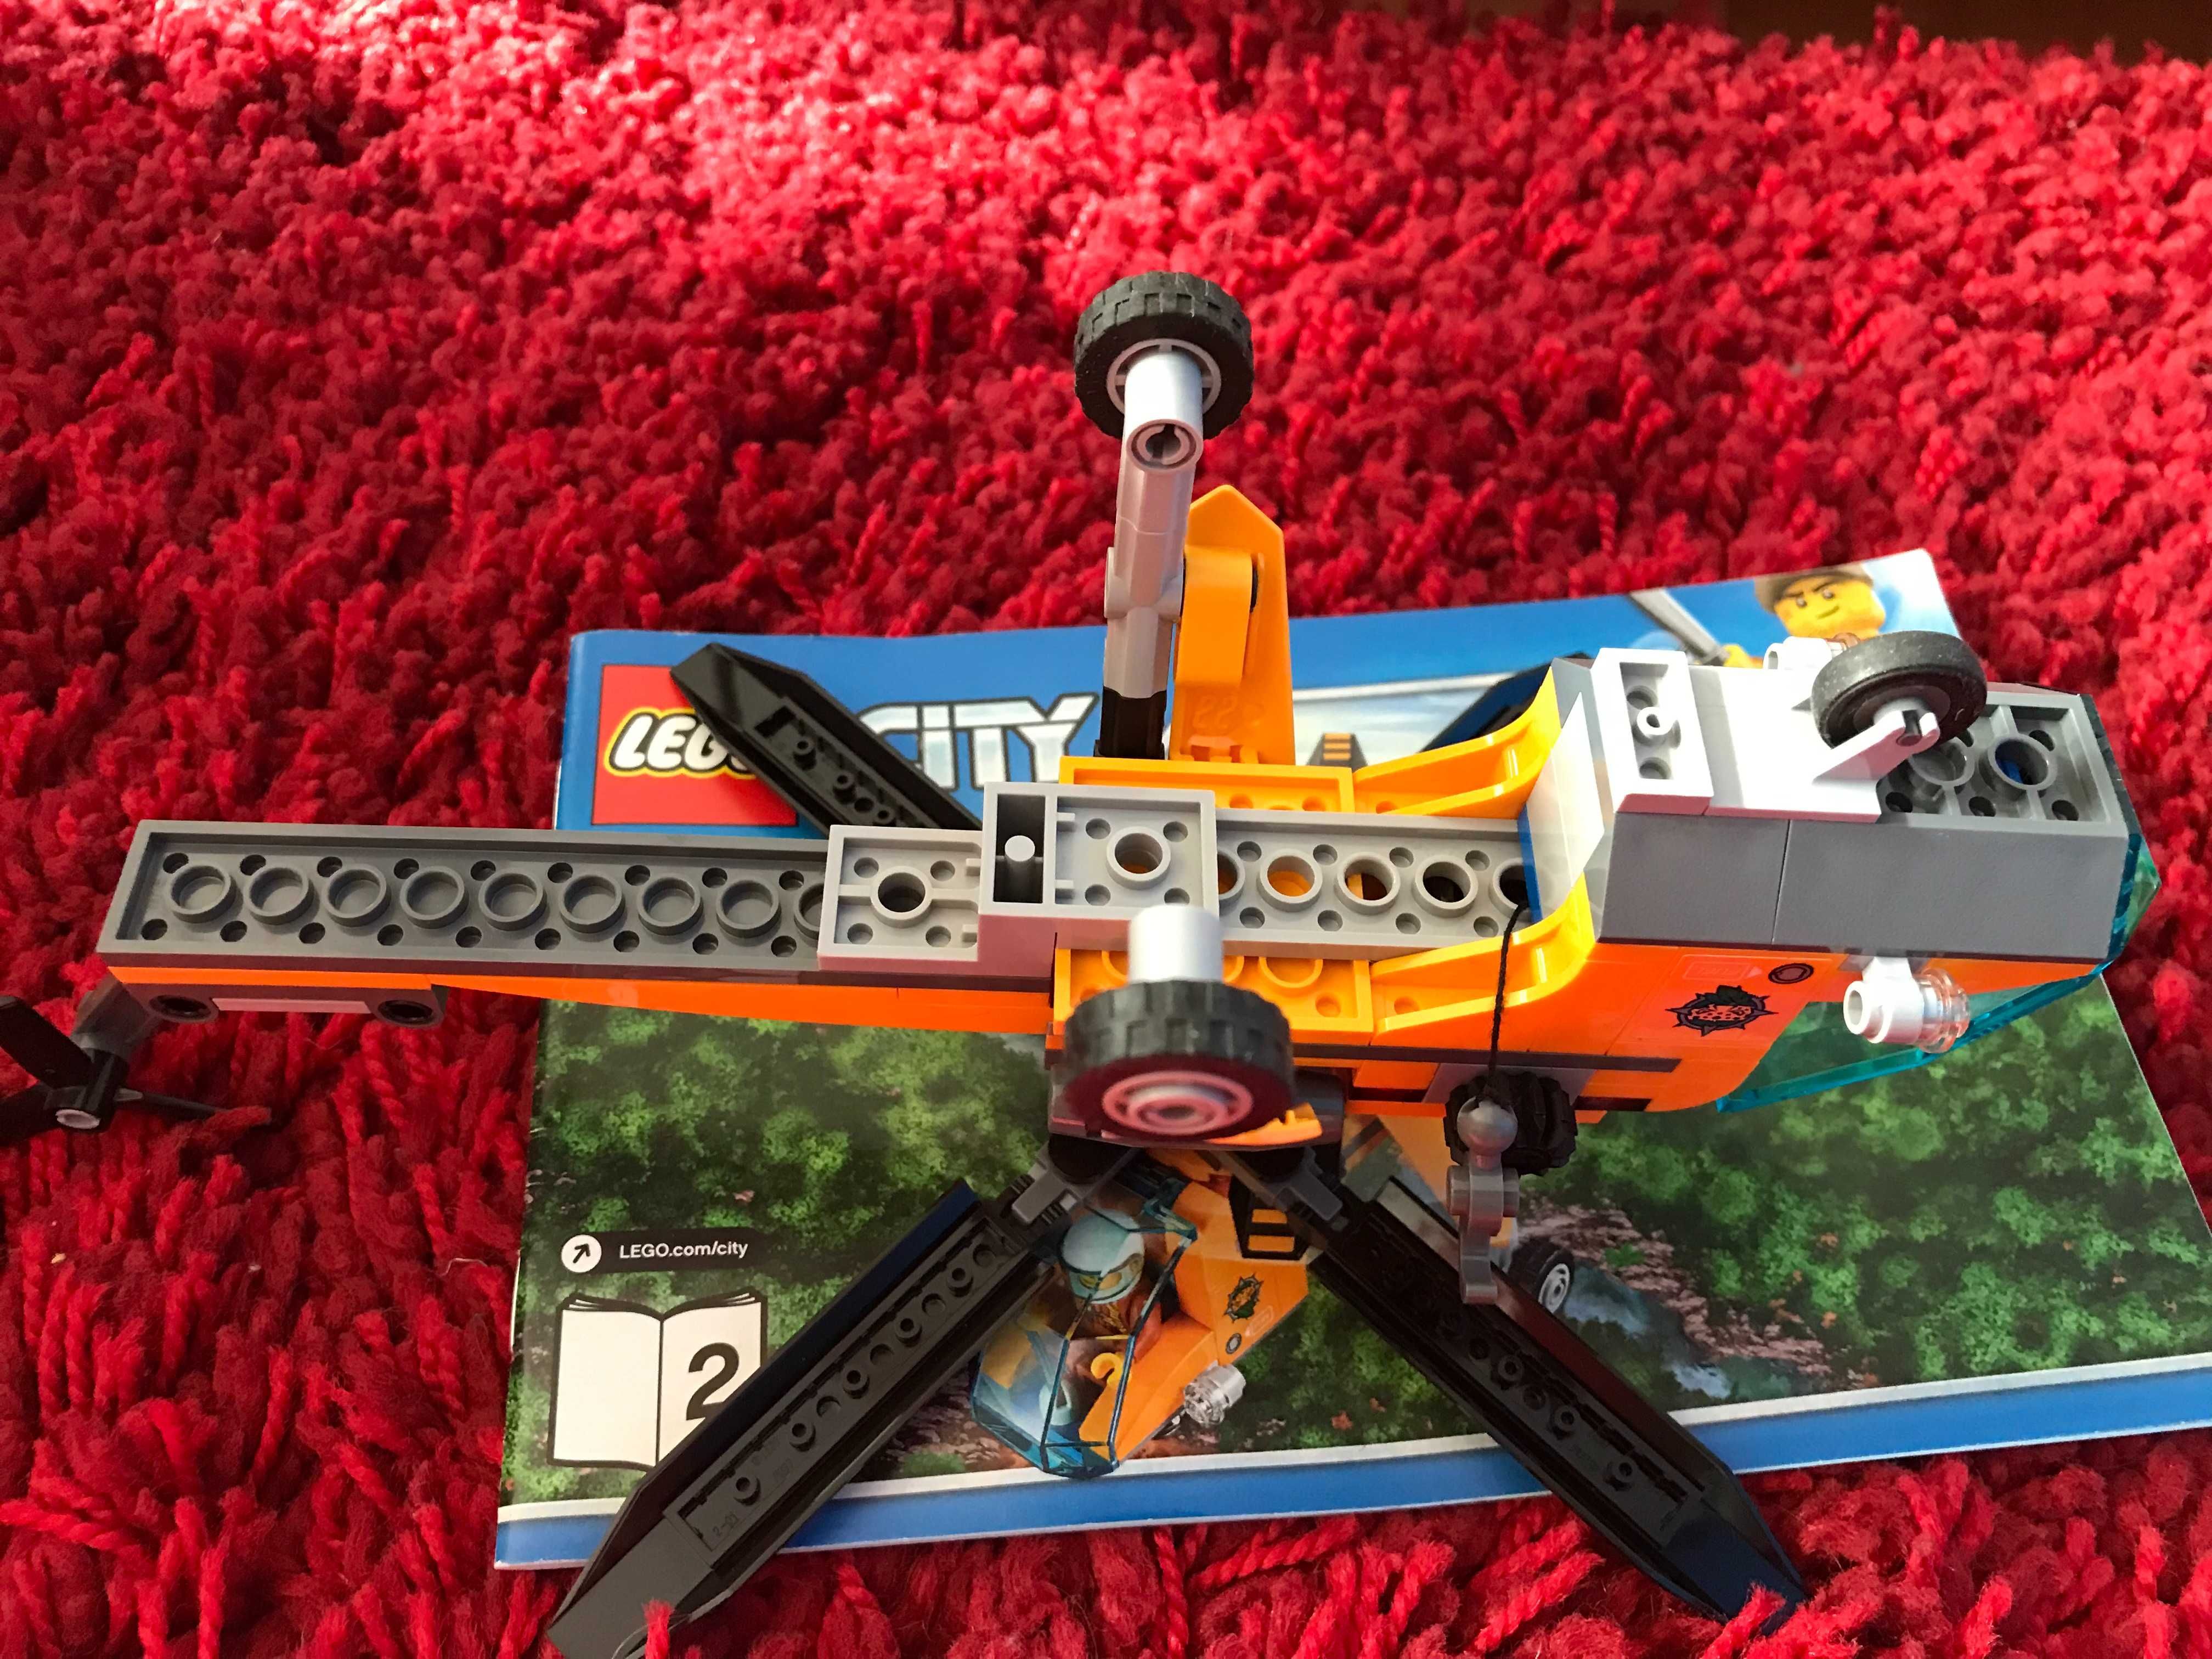 LEGO City 60158 Jungle Helikopter transportowy